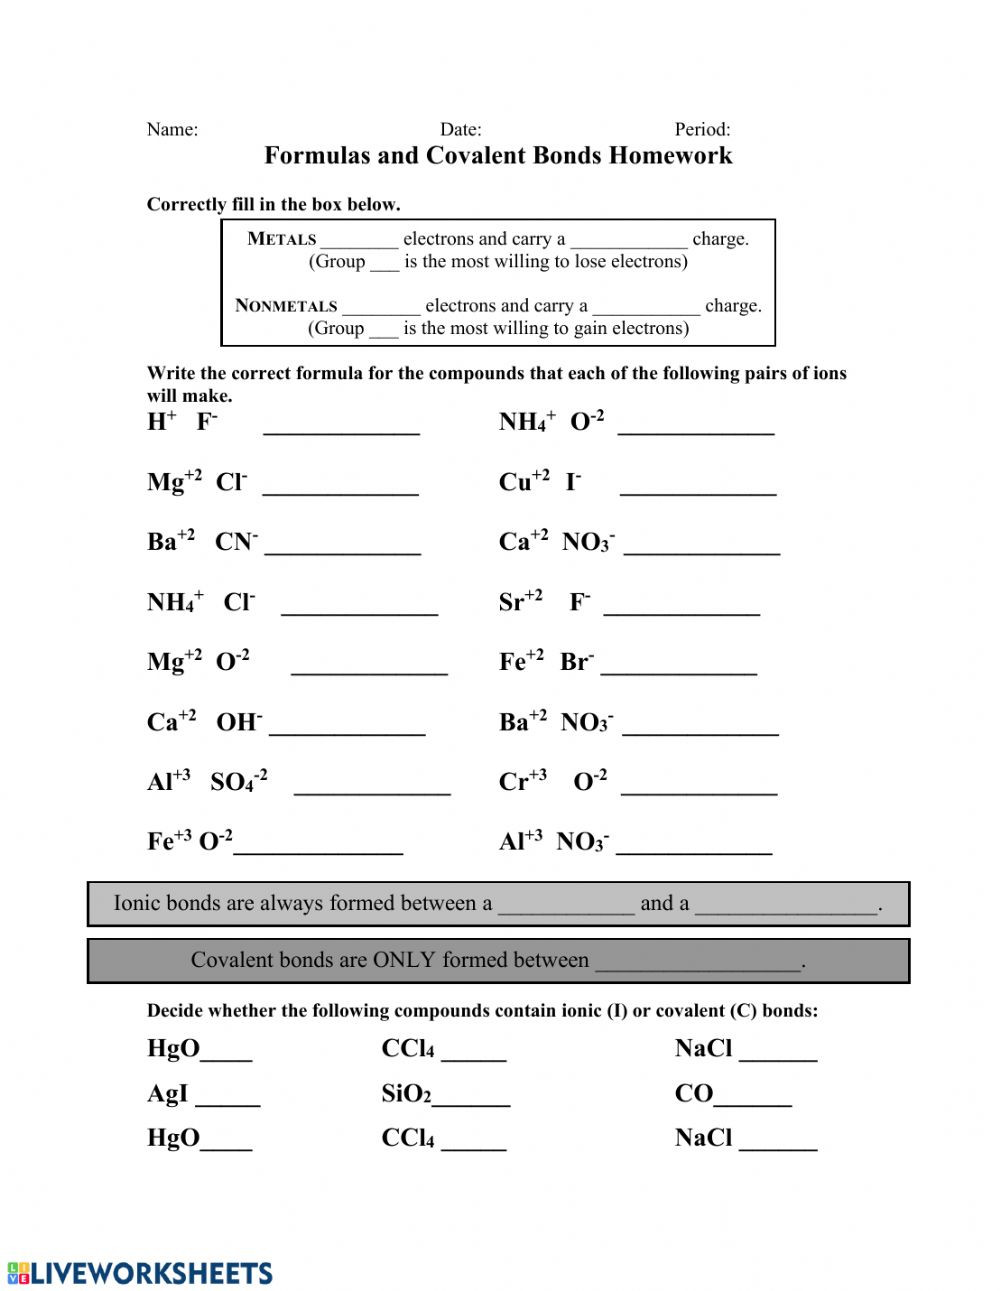 Ionic and Covalent Bonds Worksheet formulas and Covalent Bonds Interactive Worksheet